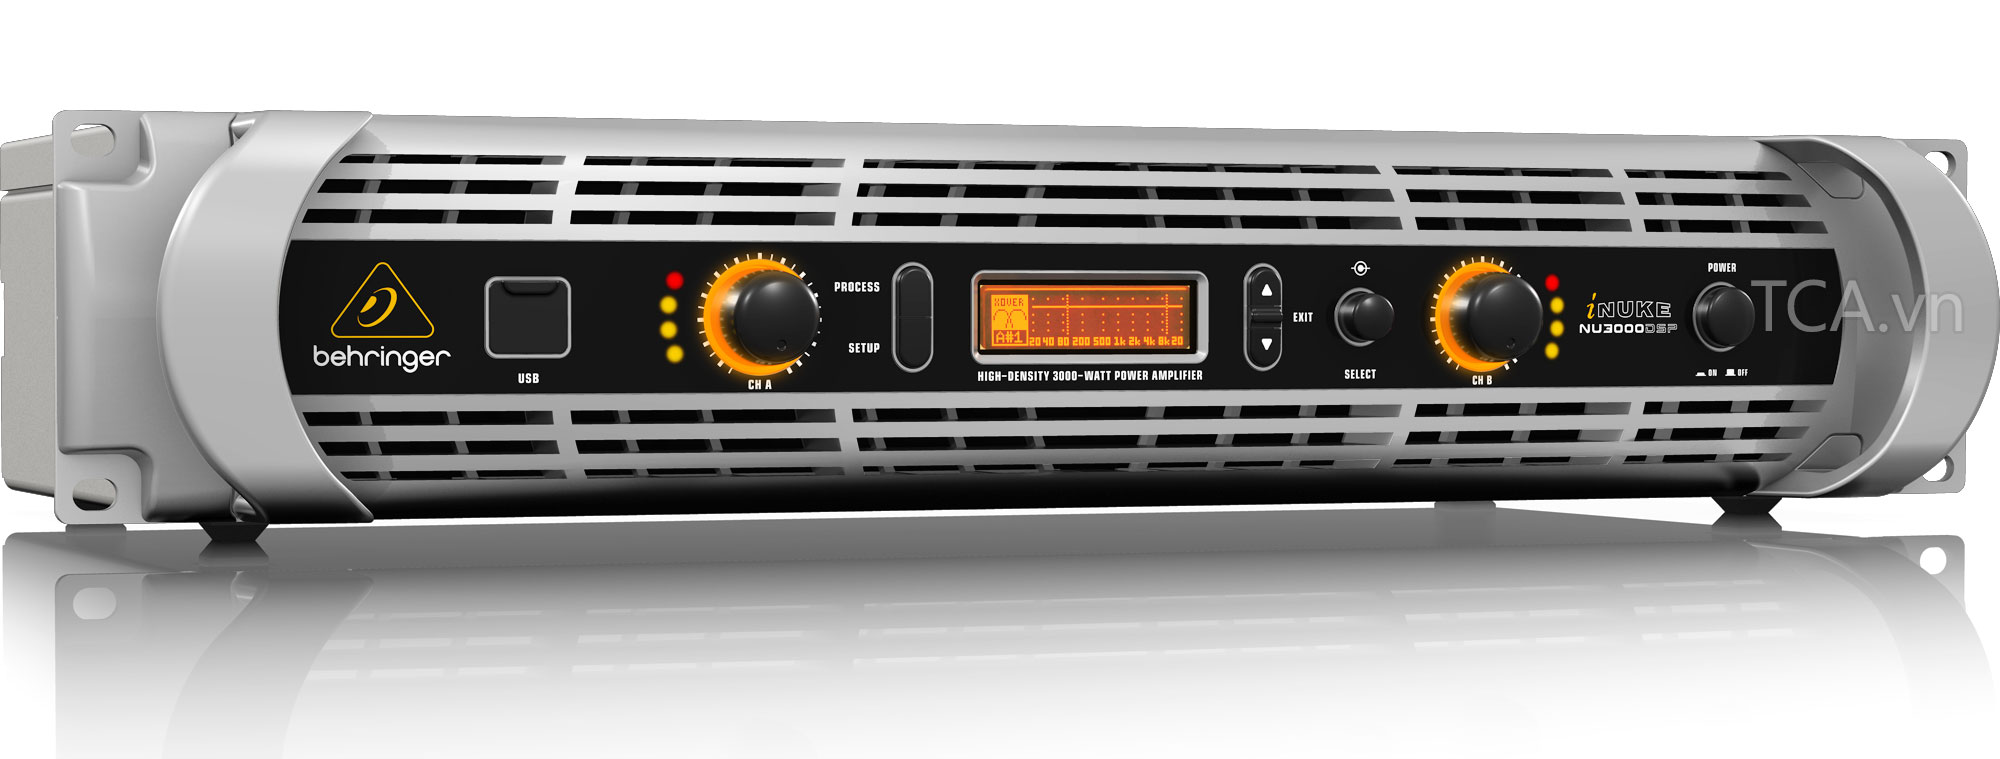 Power Amplifier BEHRINGER iNUKE NU3000DSP